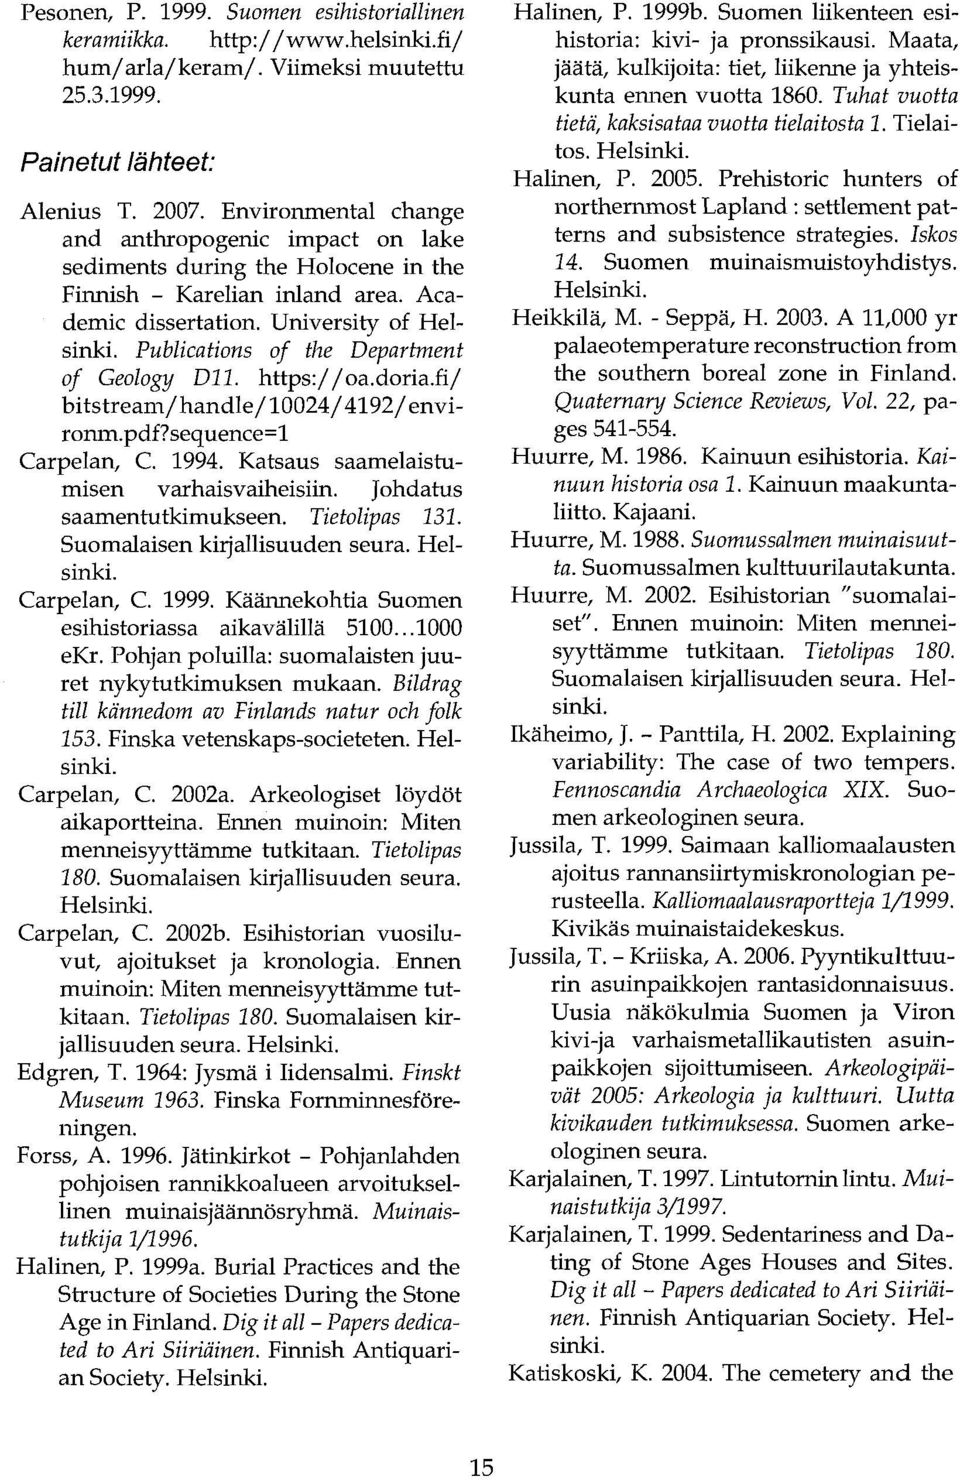 Publications of the Department of Geology Dll. https:/ / oa.doria.fij bitstream/handle/10024/ 4192/ environm.pdf?sequence=l Carpelan, C. 1994. Katsaus saamelaistumisen varhaisvaiheisiin.